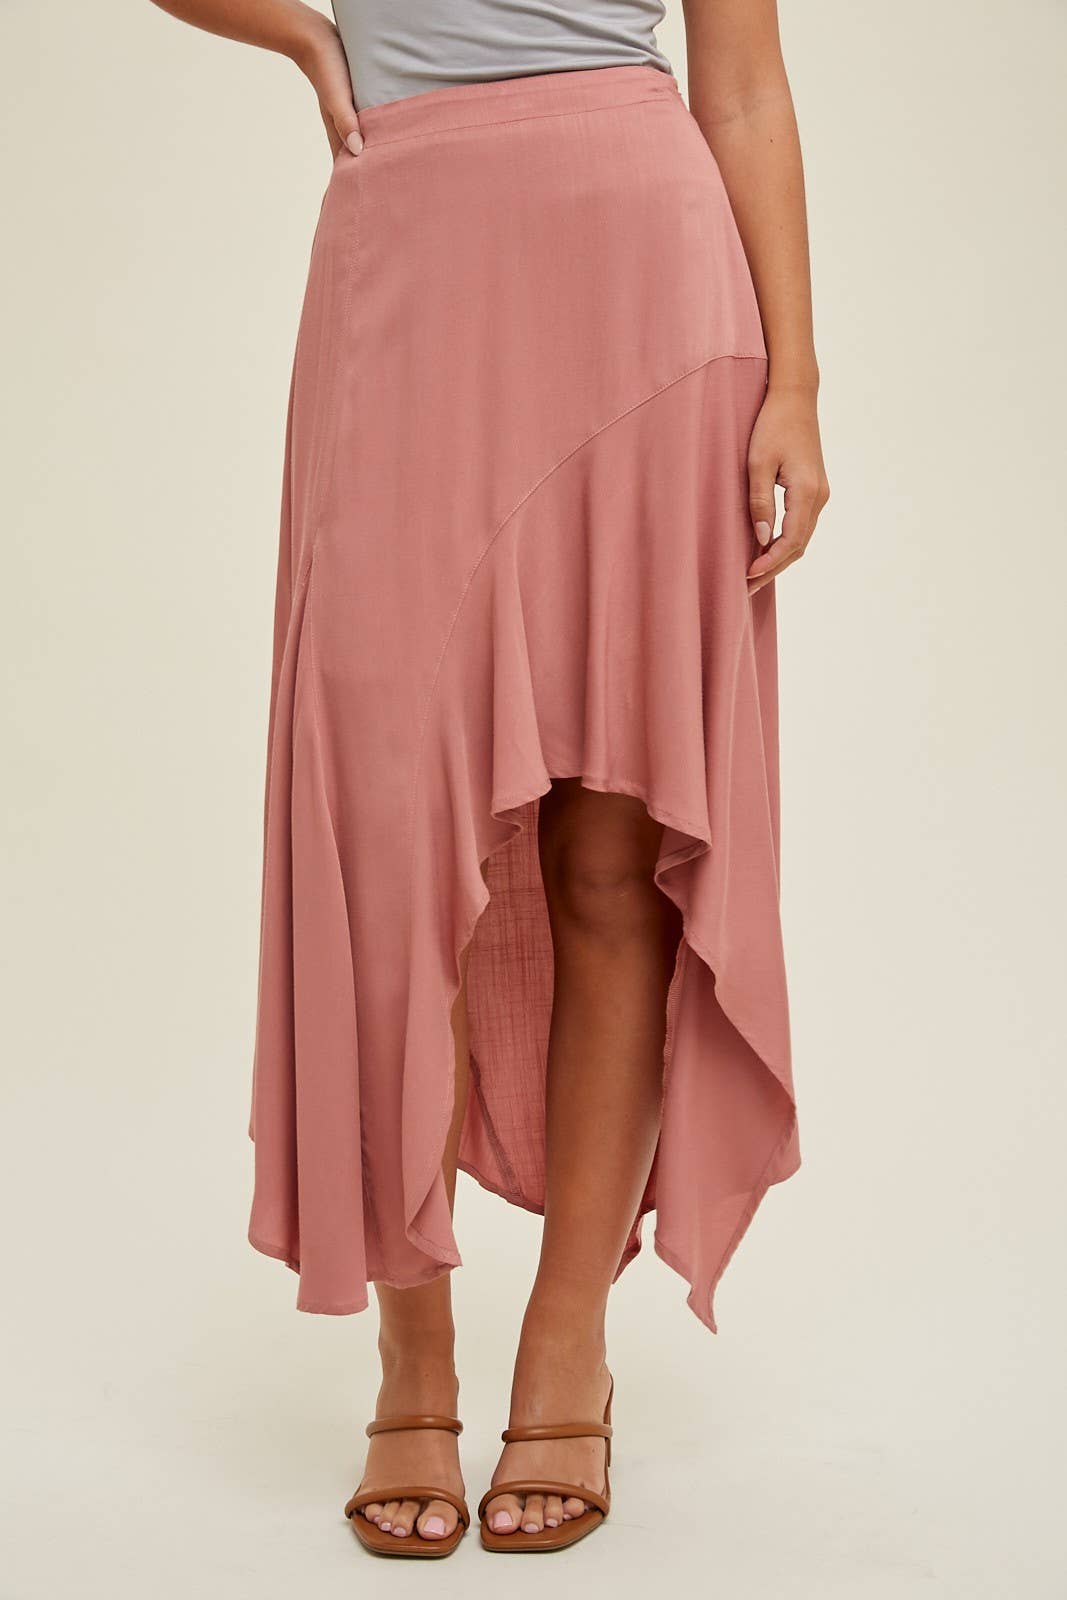 Rose Pink Asymmetrical High Low Midi Skirt with Ruffle Hem